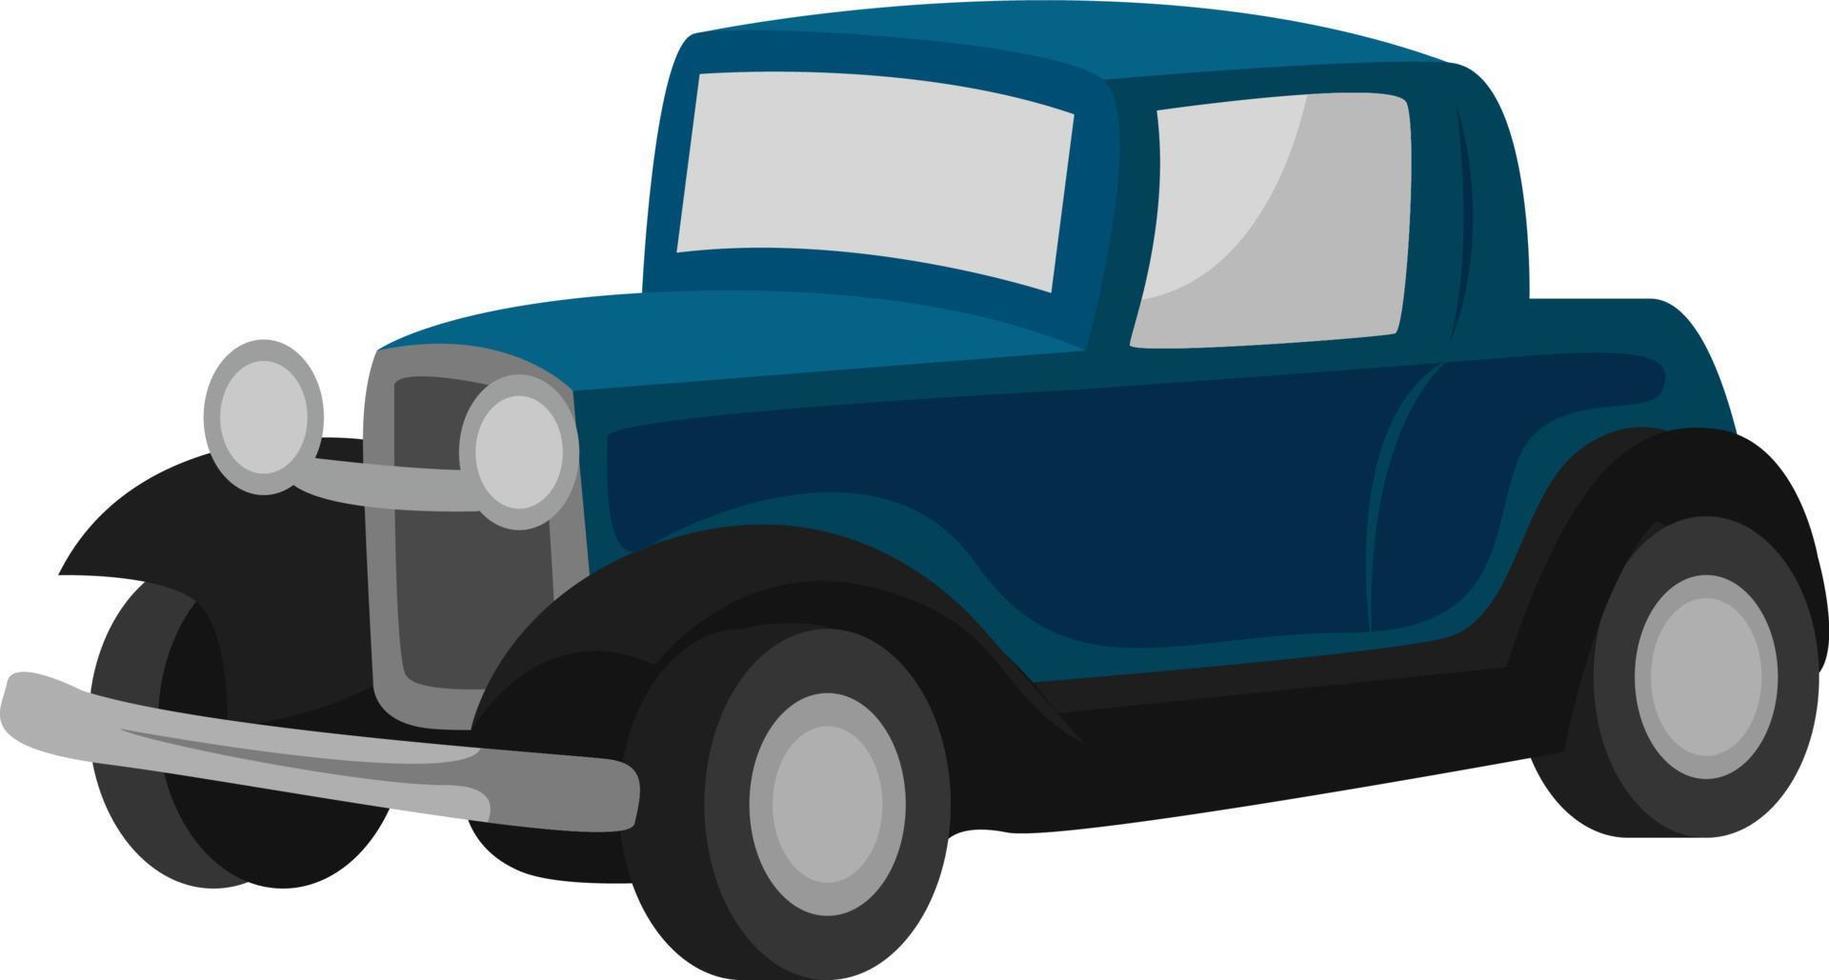 Blue old car, illustration, vector on white background